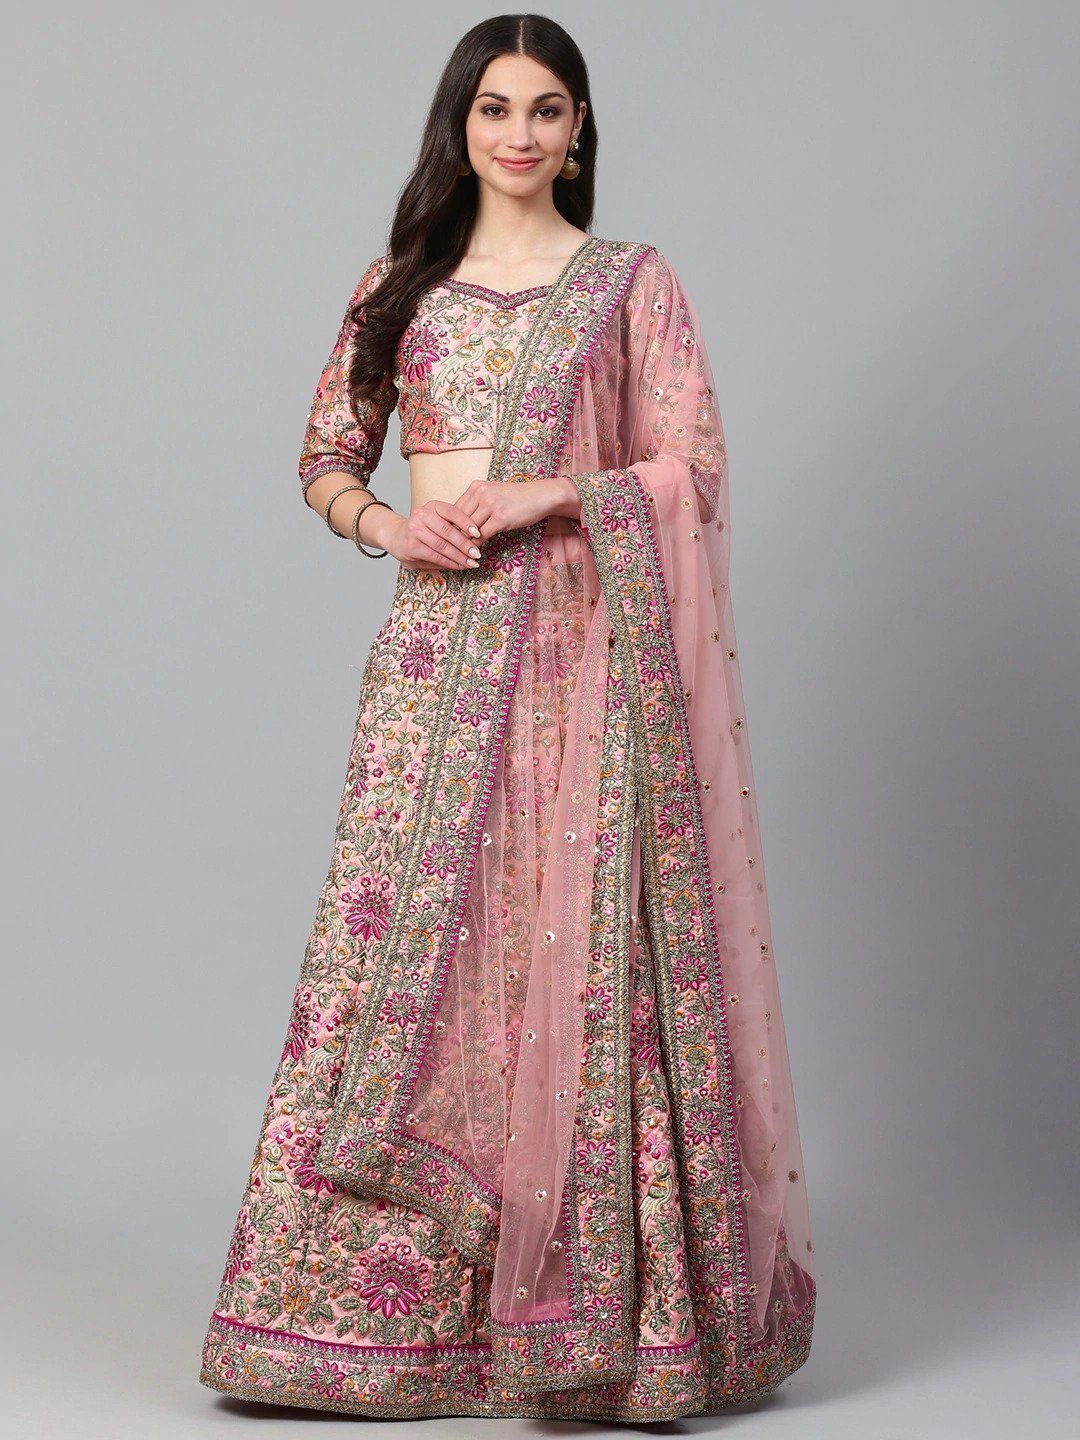 Buy Ethnic Yard Clothing online - Women - 36 products | FASHIOLA.in